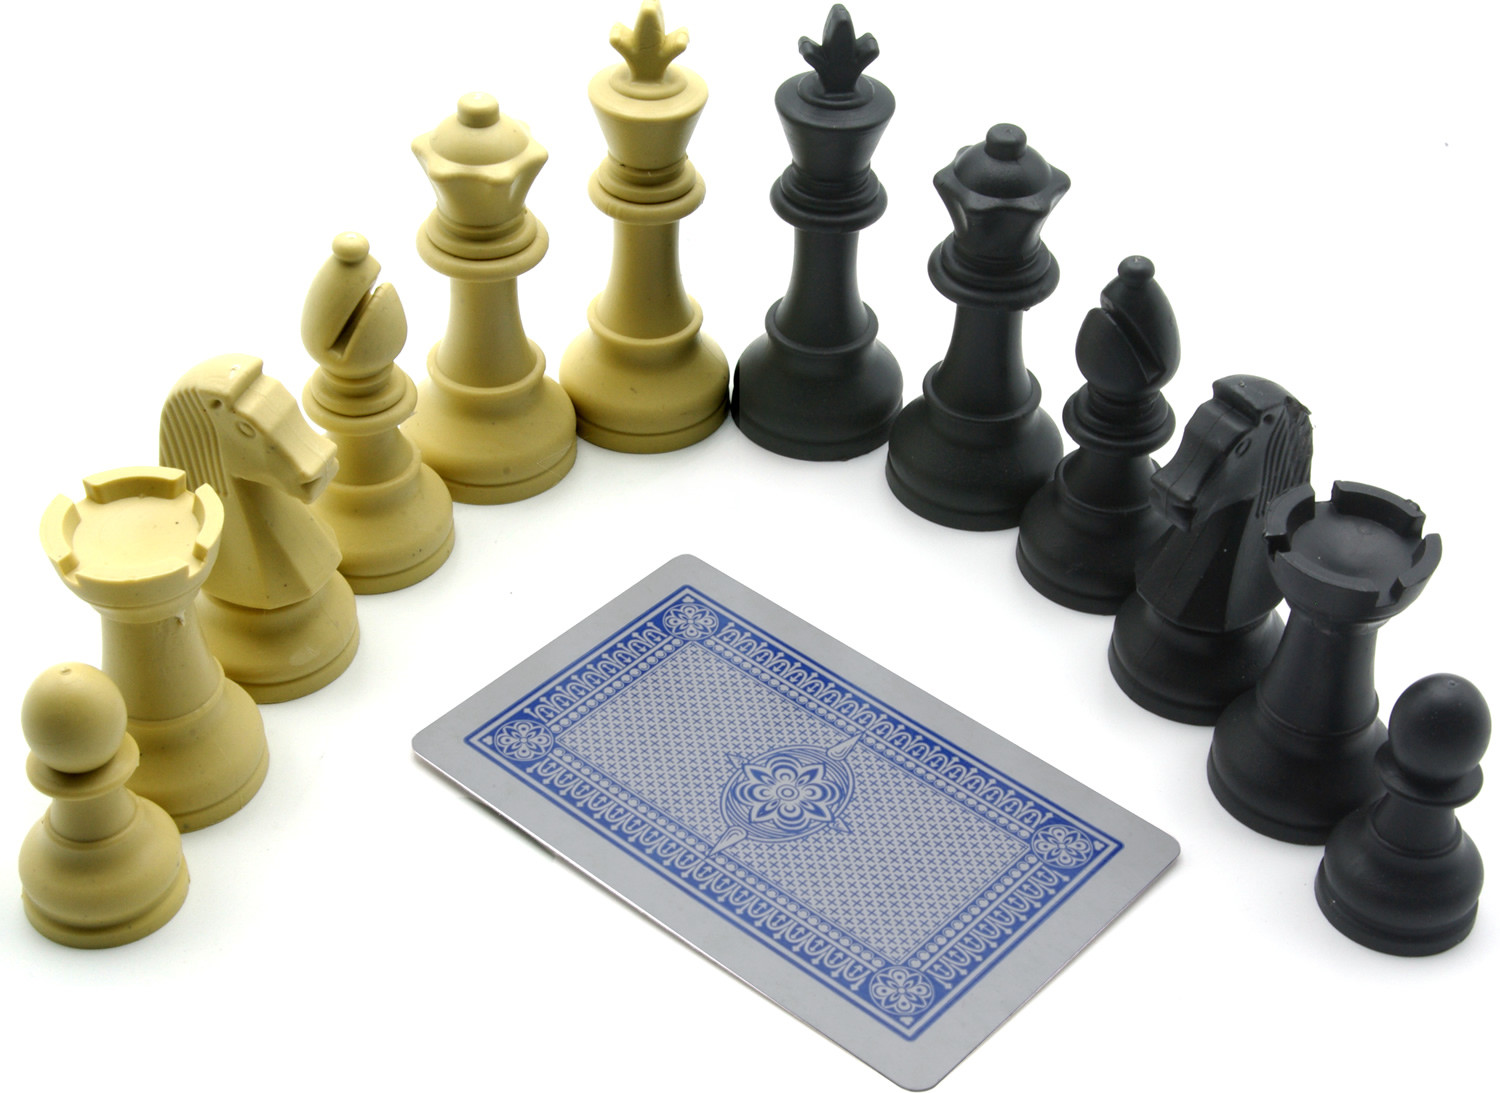 65mm plastic Chess pieces / Chessmen